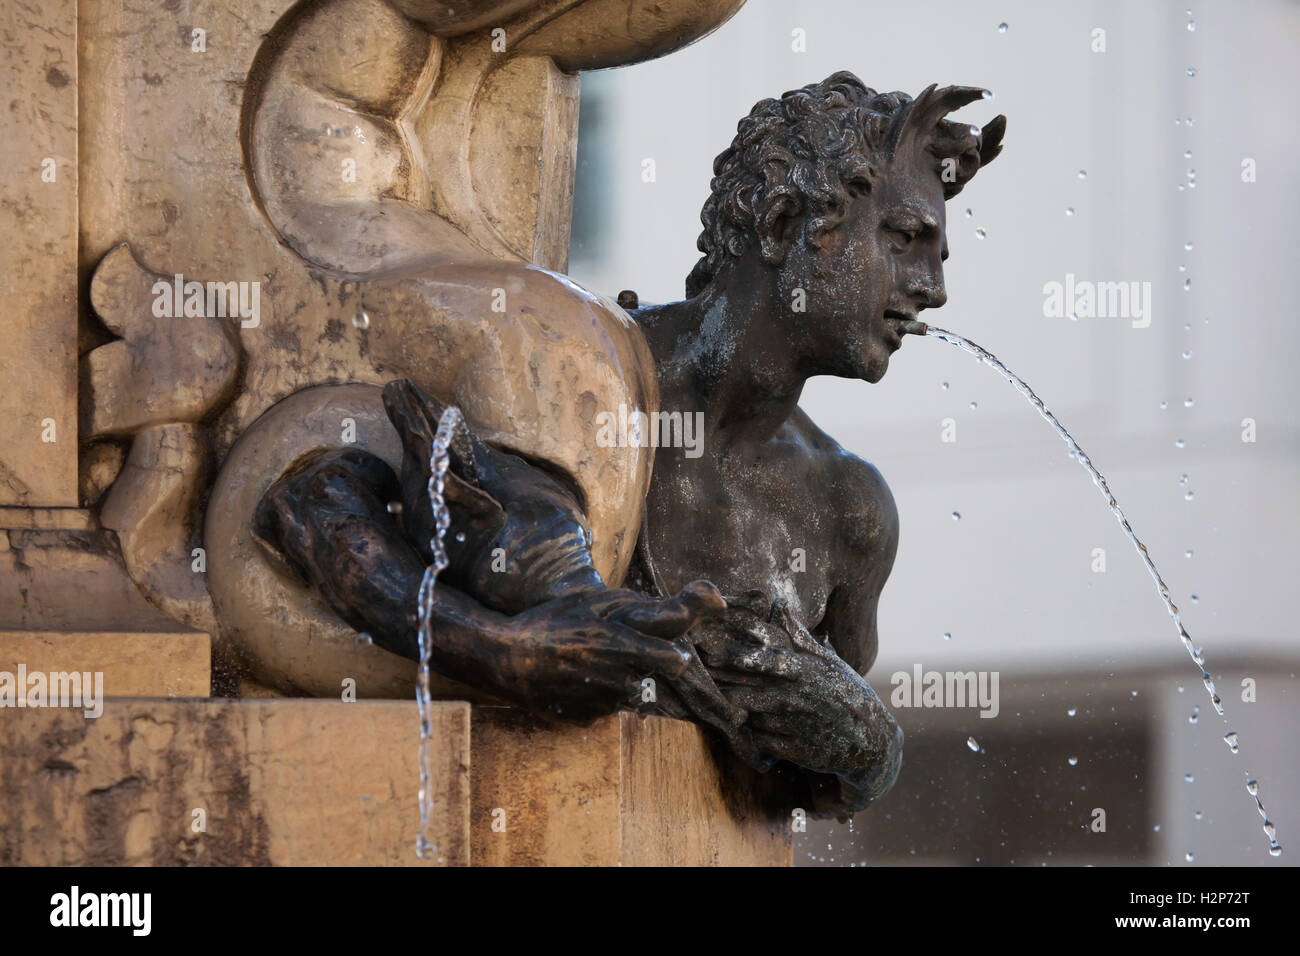 Triton. Statua in bronzo olandese scultore manierista Adriaen de Vries sul Hercules Fontana di Augsburg, Baviera, Germania. Foto Stock